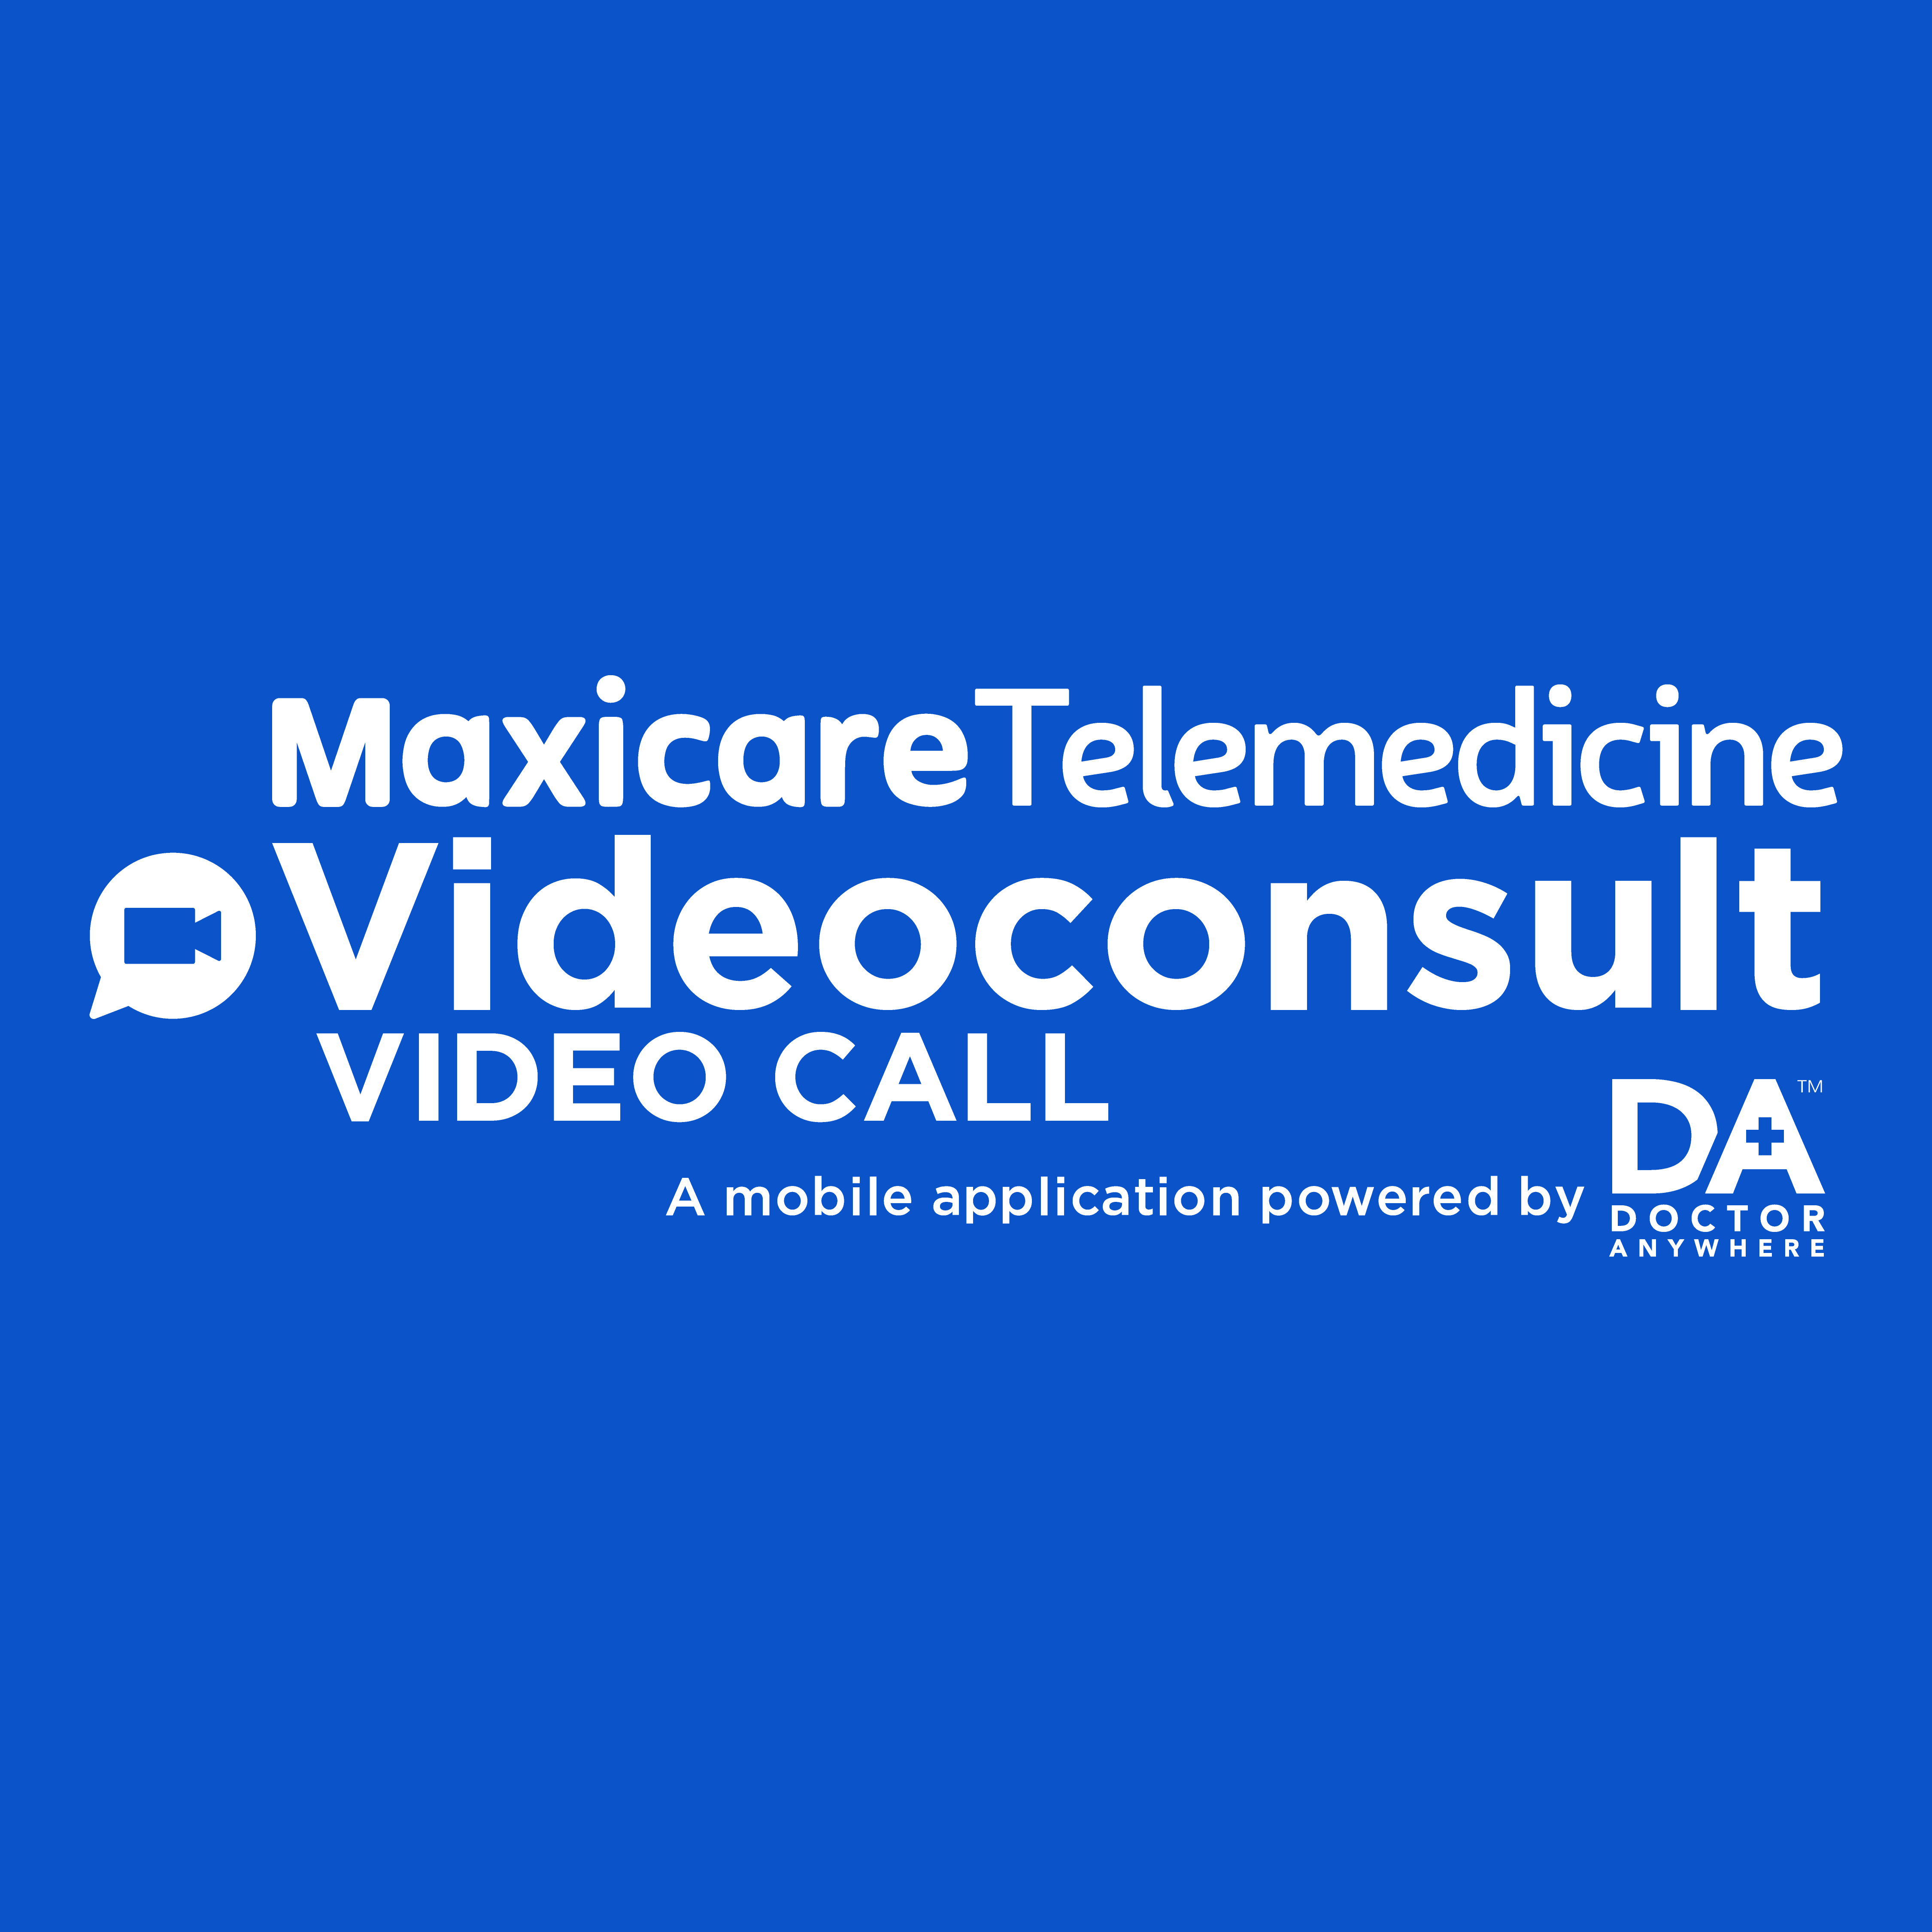 Telemedicine Video Consult Video Call